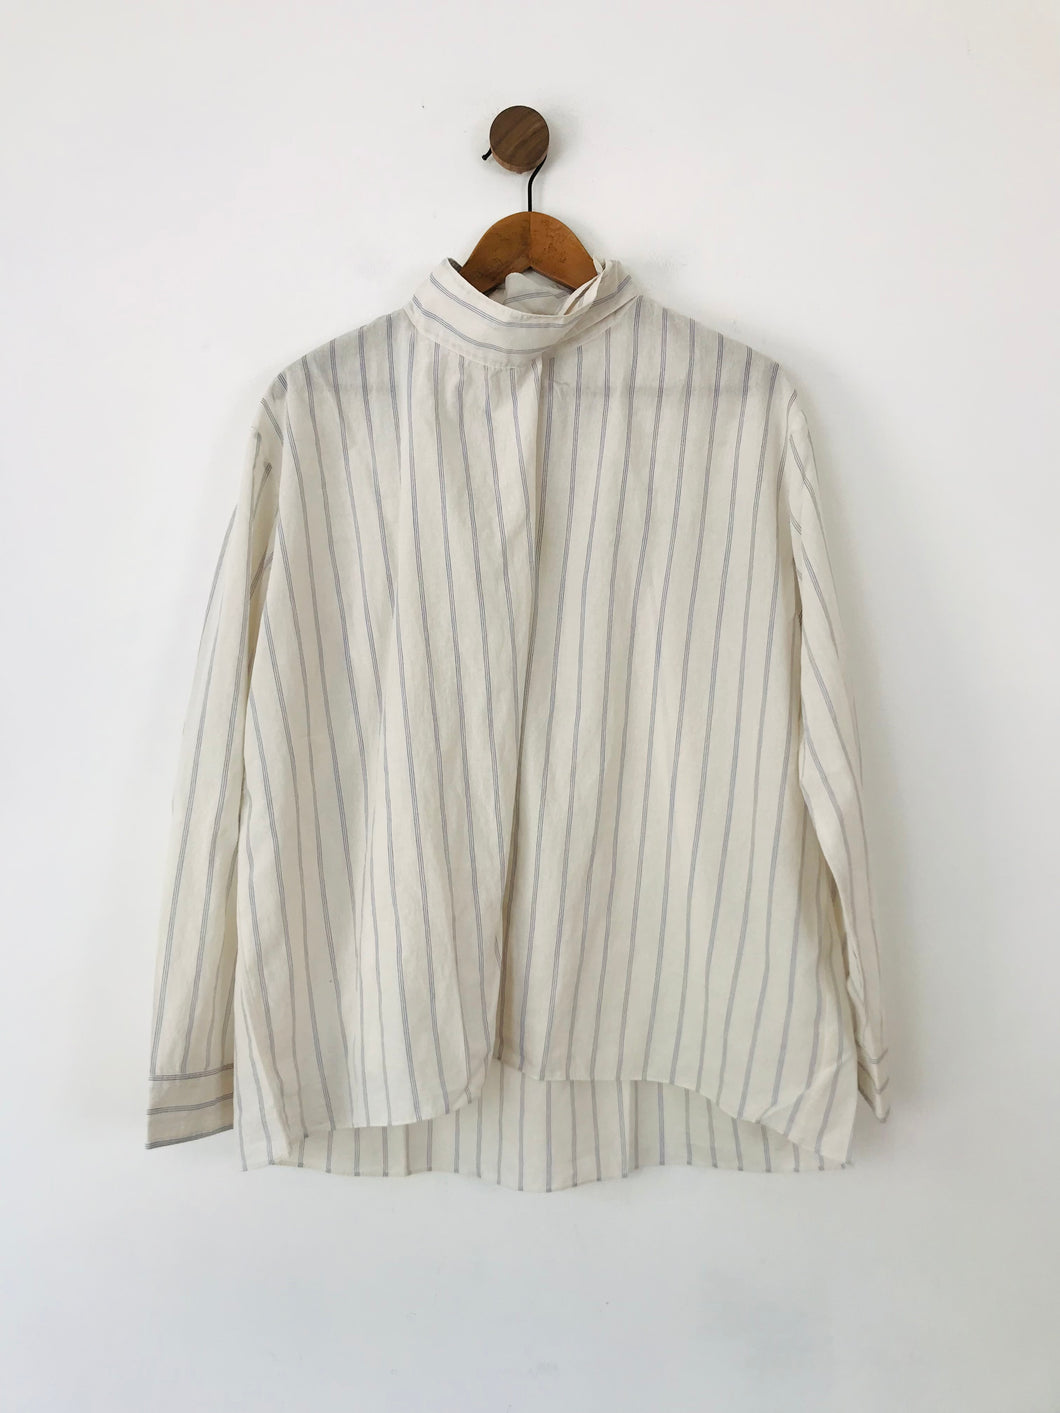 Zara Women's Striped High Neck Blouse | XL UK16 | White